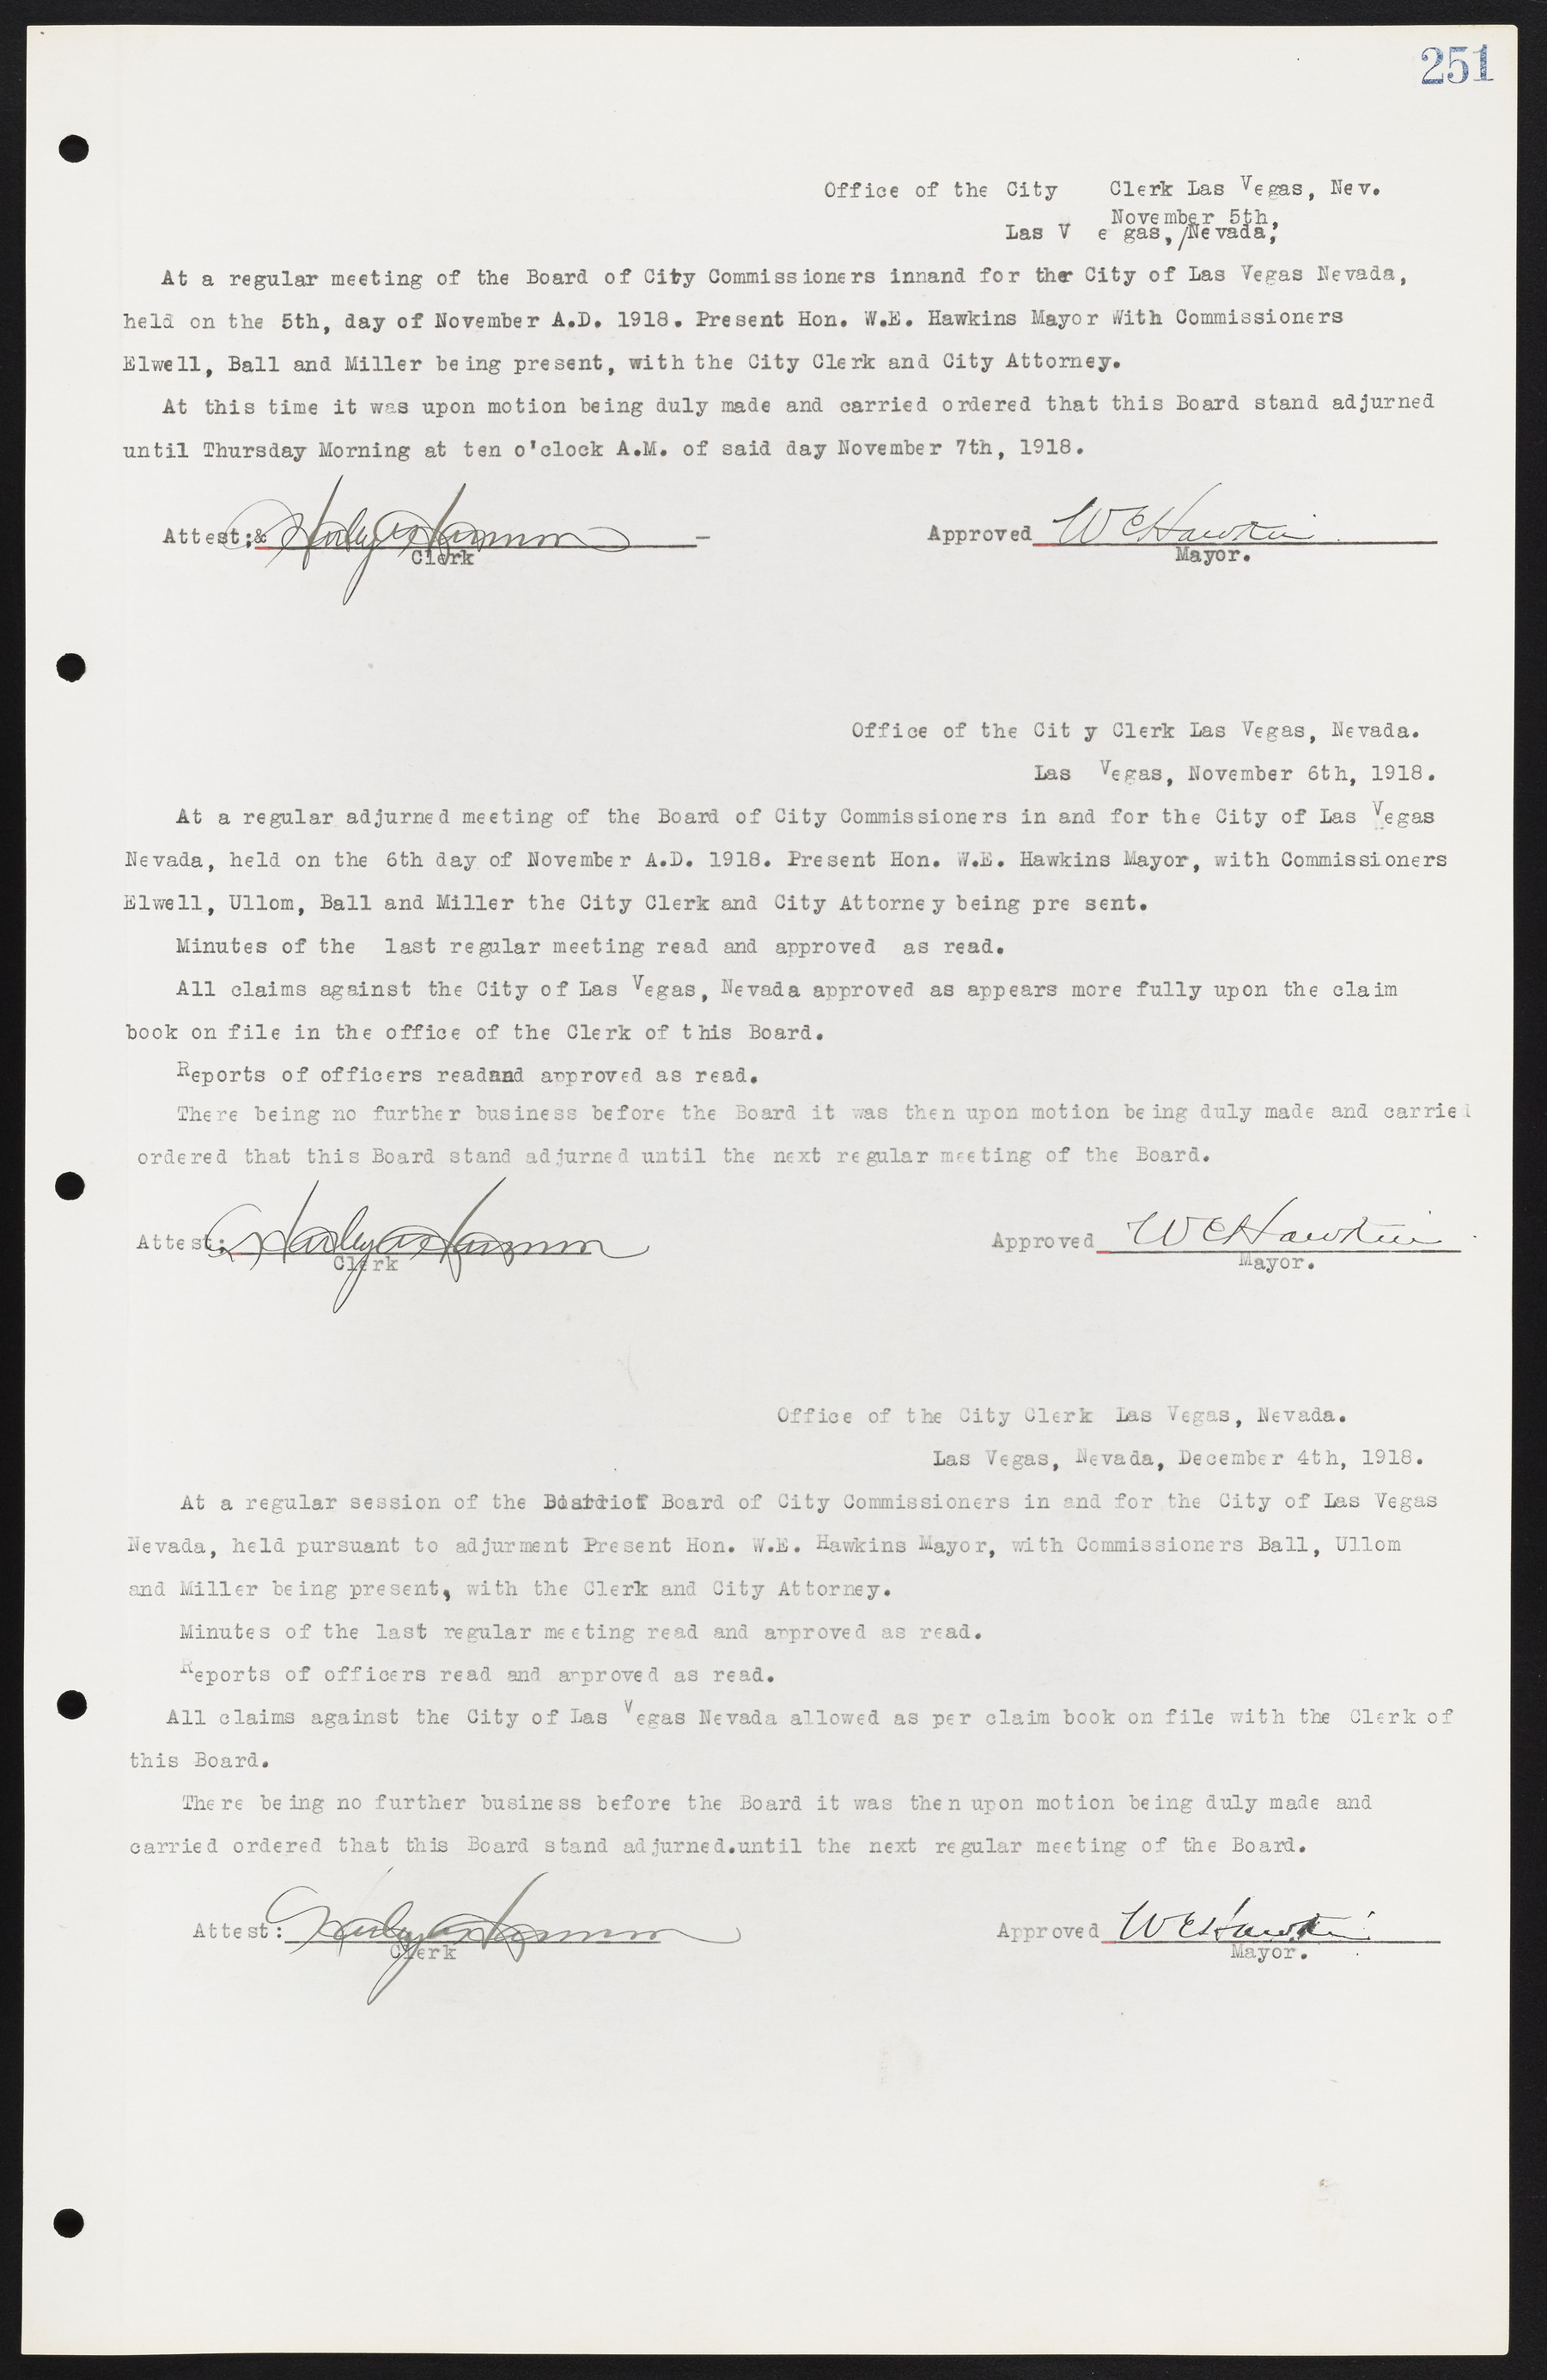 Las Vegas City Commission Minutes, June 22, 1911 to February 7, 1922, lvc000001-267